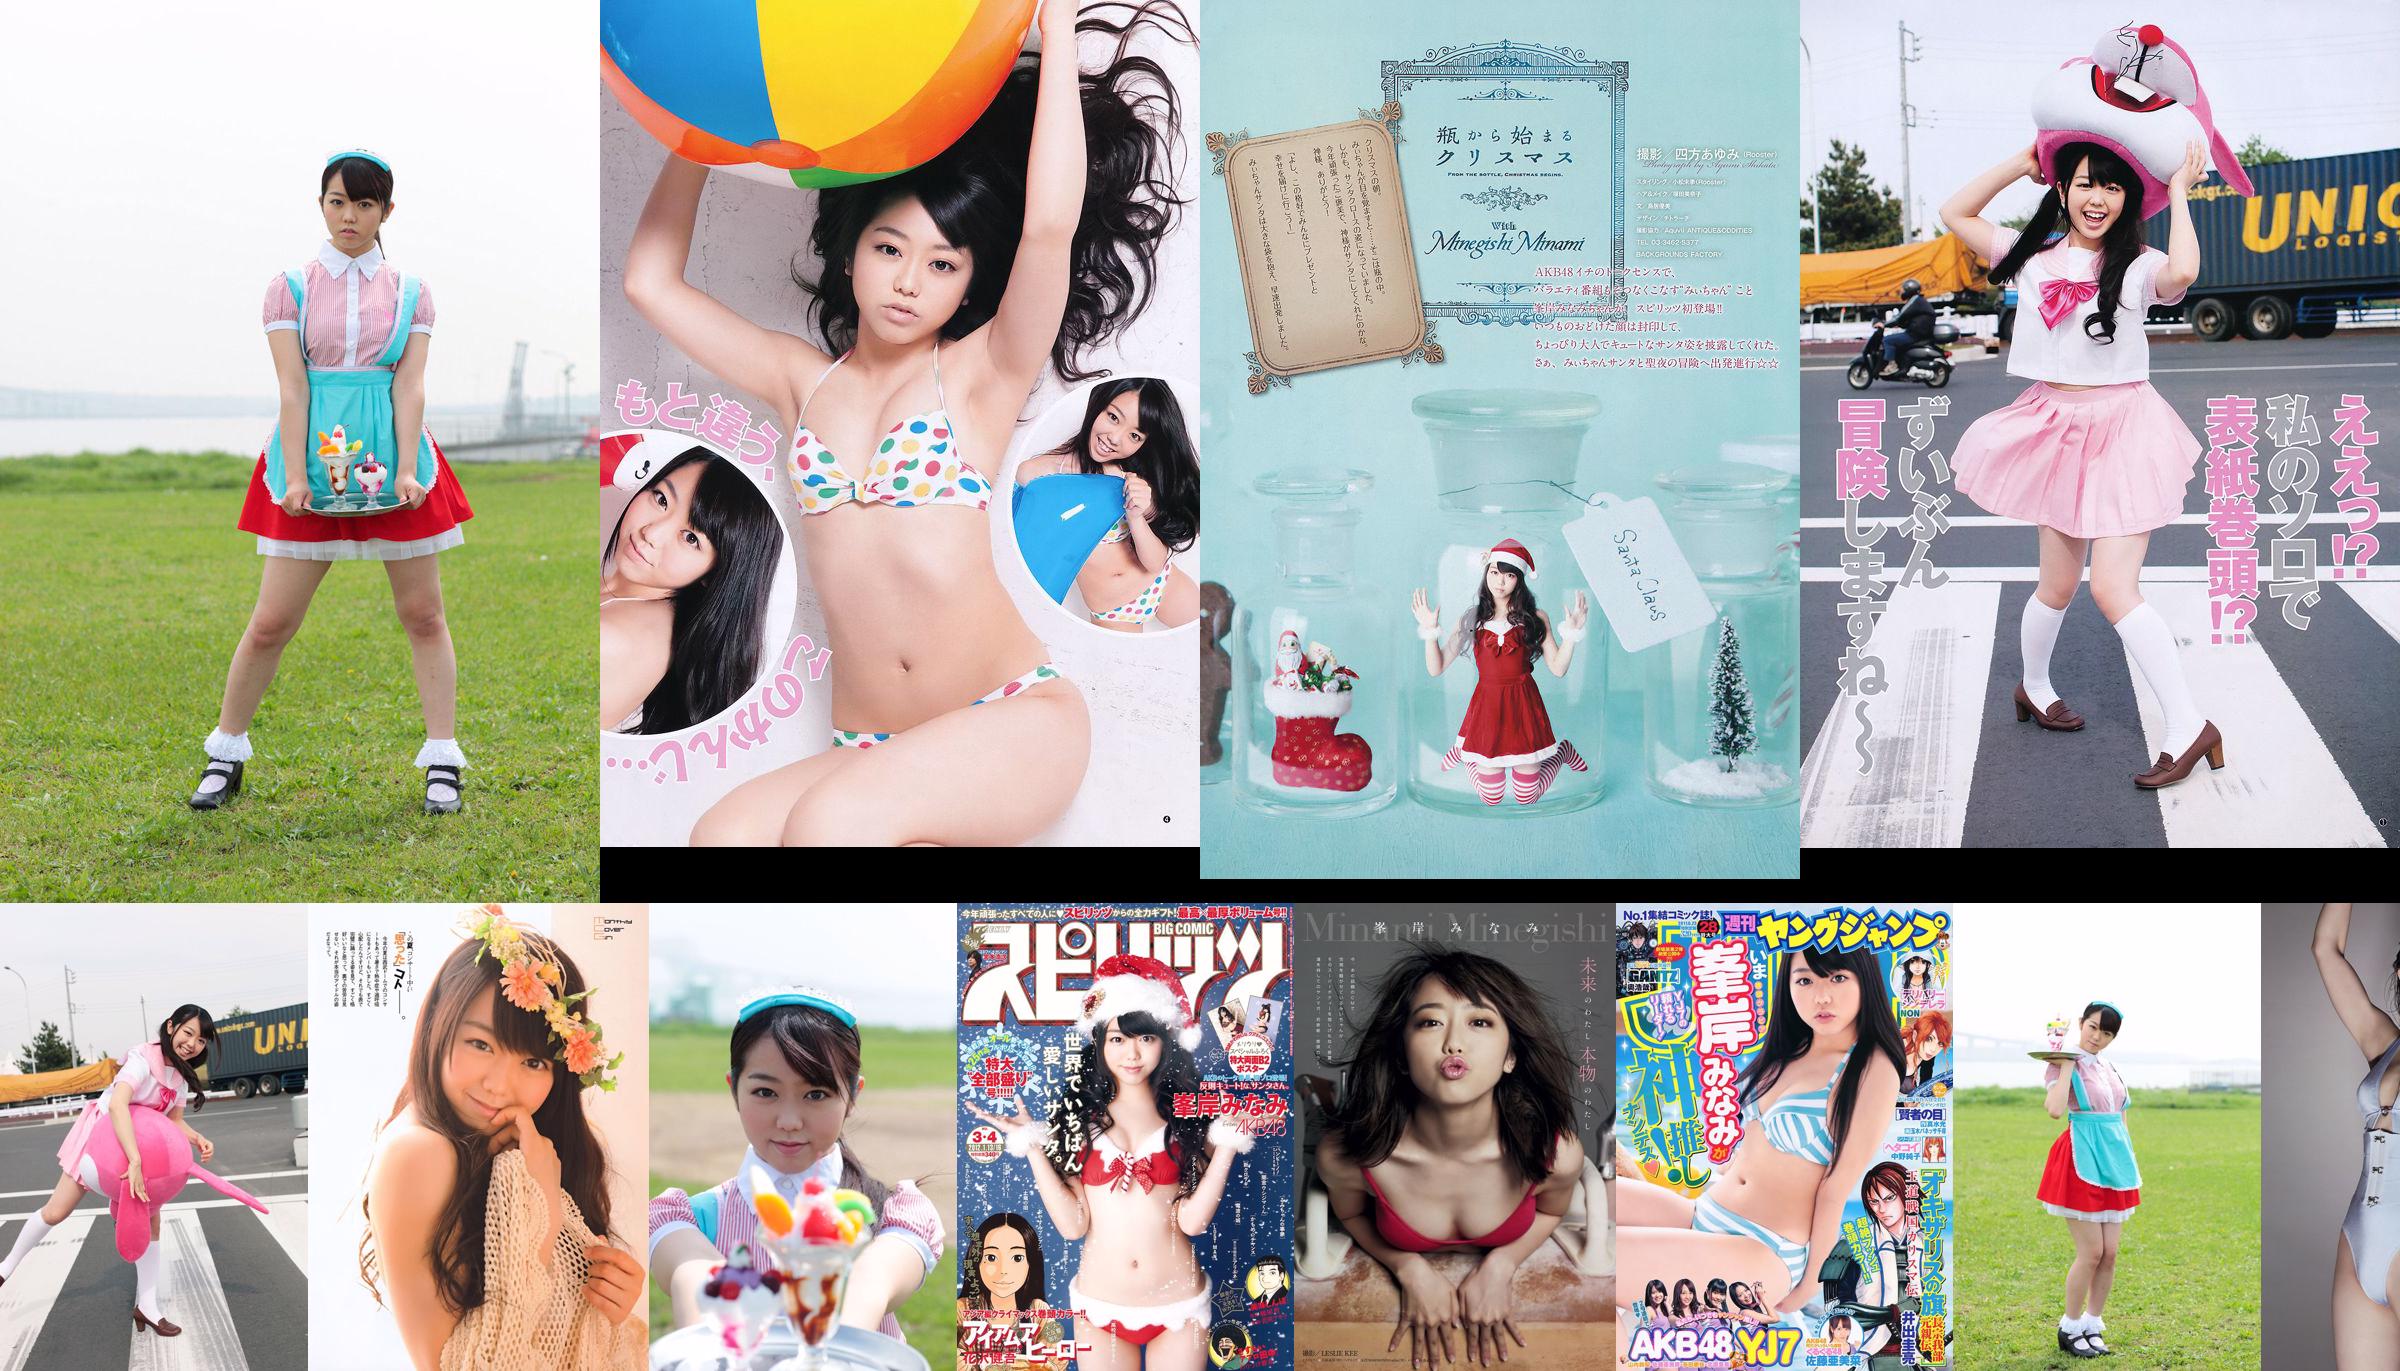 [Grands esprits de la bande dessinée hebdomadaire] Minaki Minegishi 2012 N ° 03-04 Photo Magazine No.739d26 Page 1